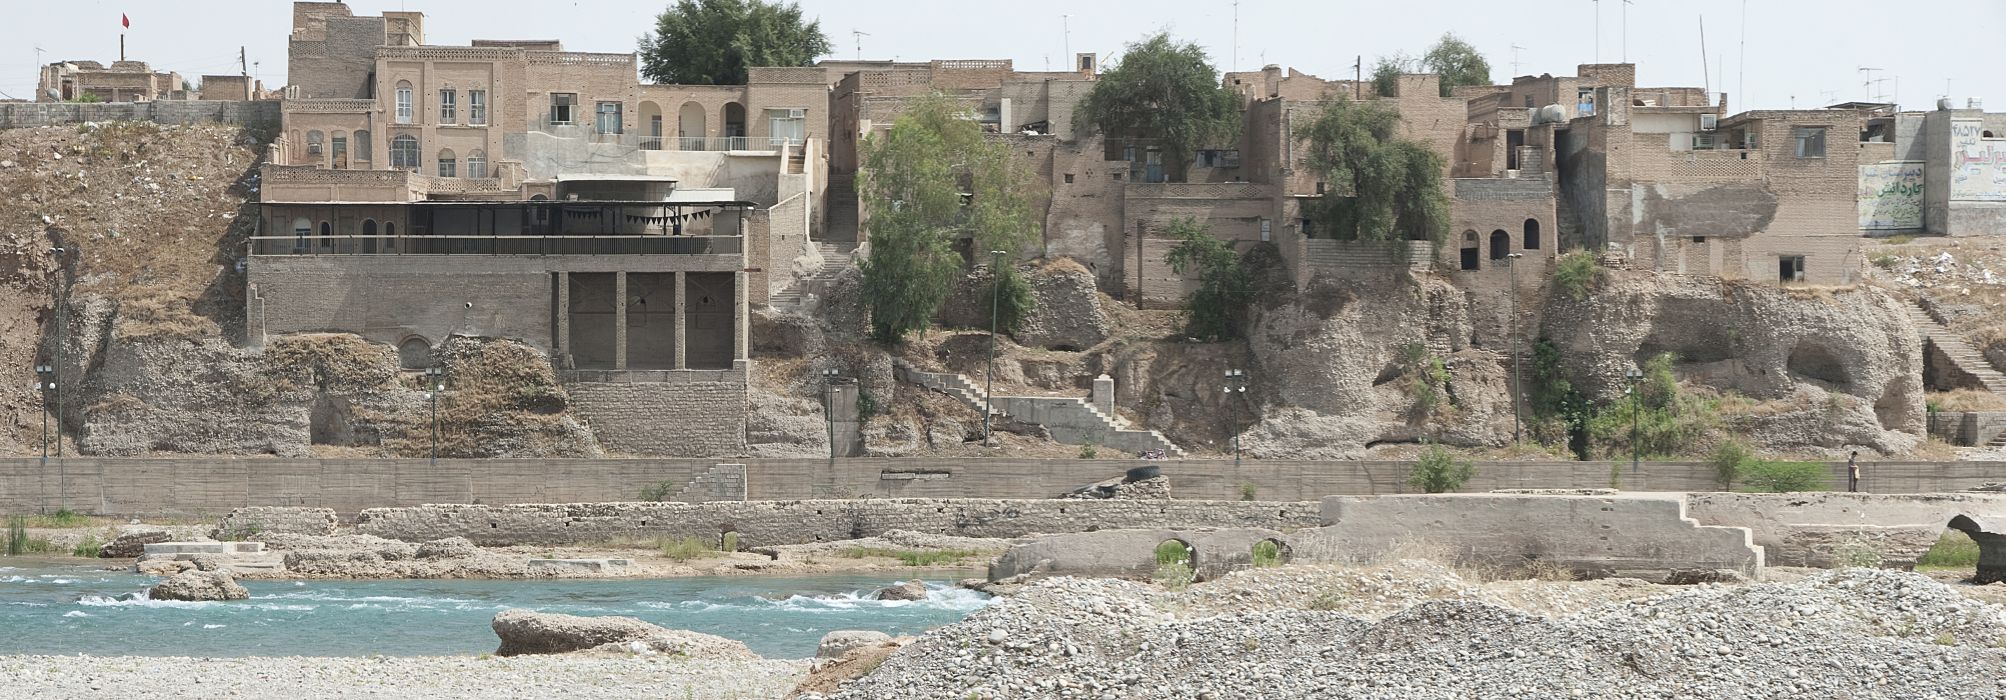 View of houses along riverbank upstream from Pul-i Qadim (Old Sasanian Bridge).